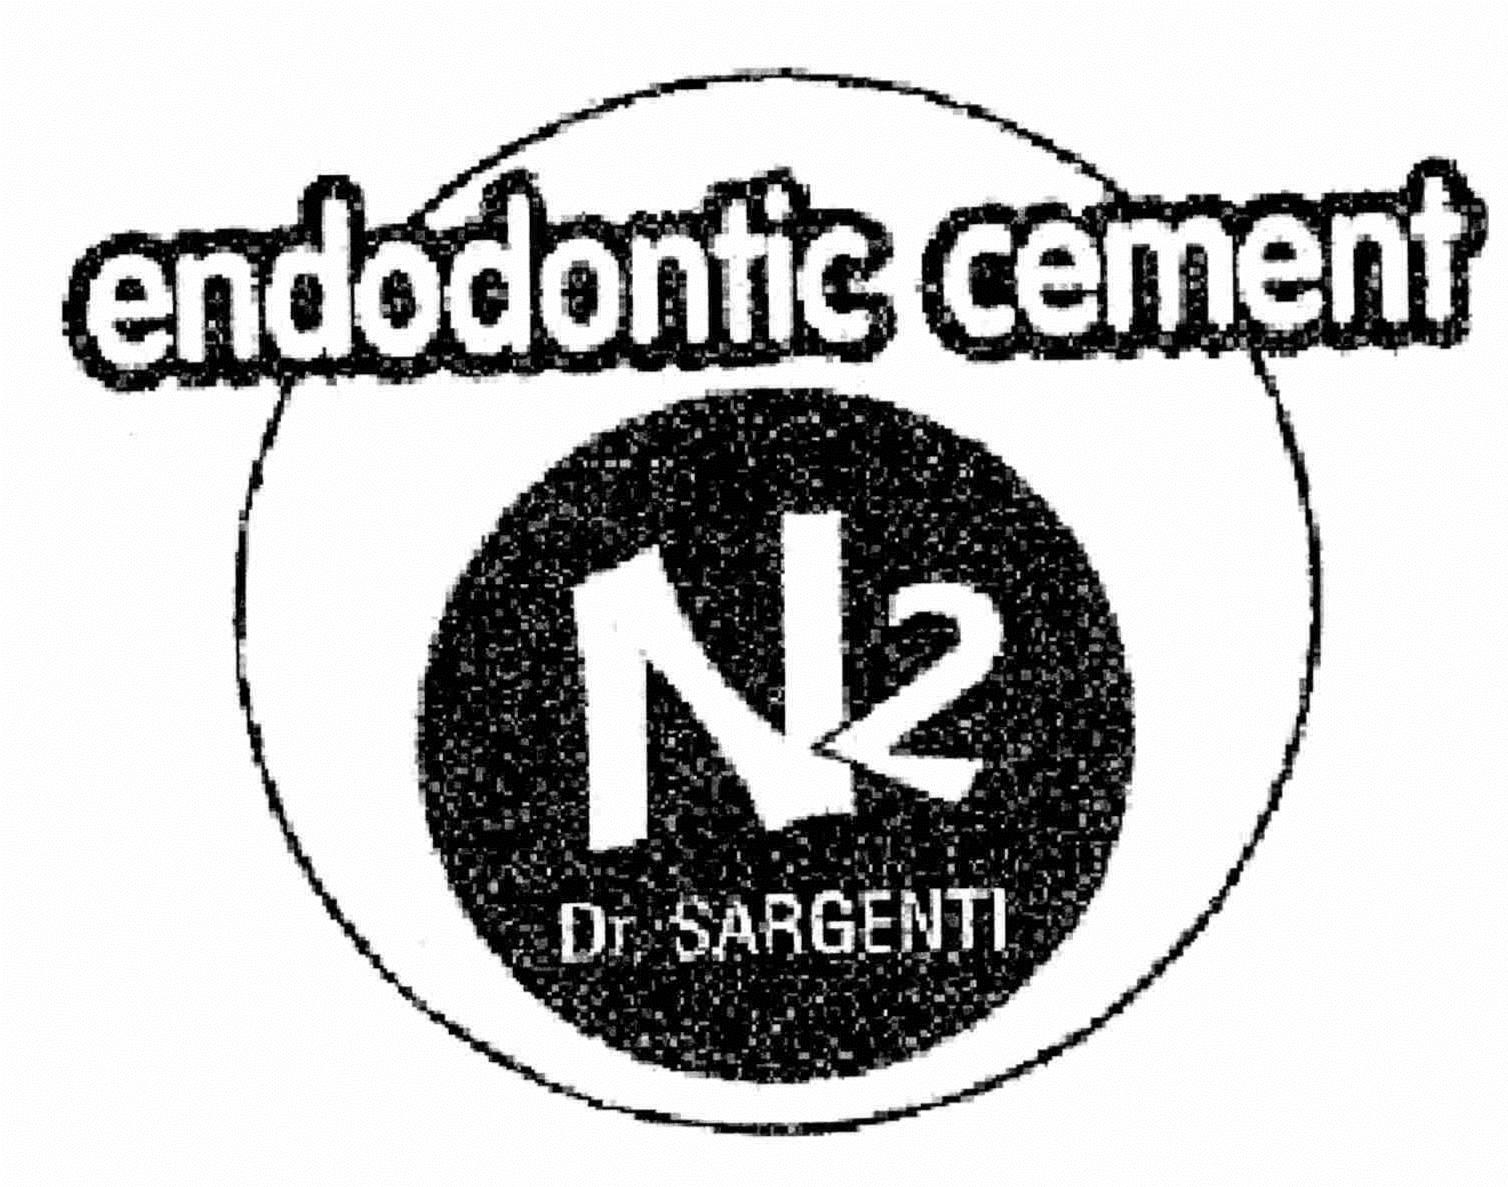  N2 ENDODONTIC CEMENT DR. SARGENTI